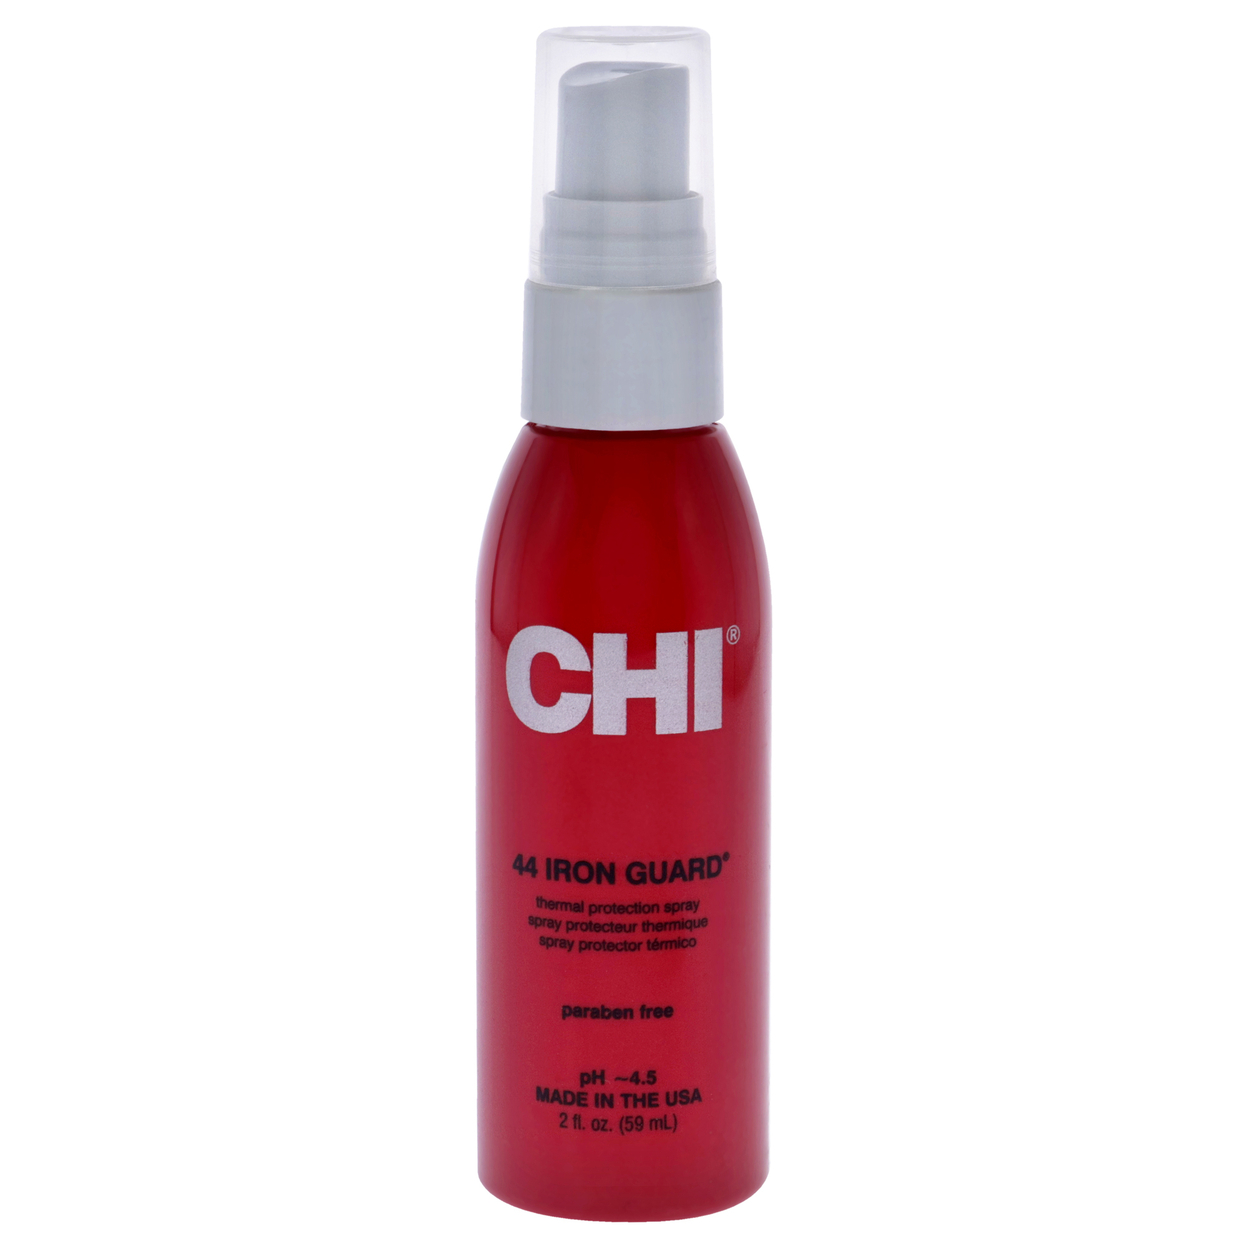 CHI 44 Iron Guard Thermal Protection Spray Hair Spray 2 Oz